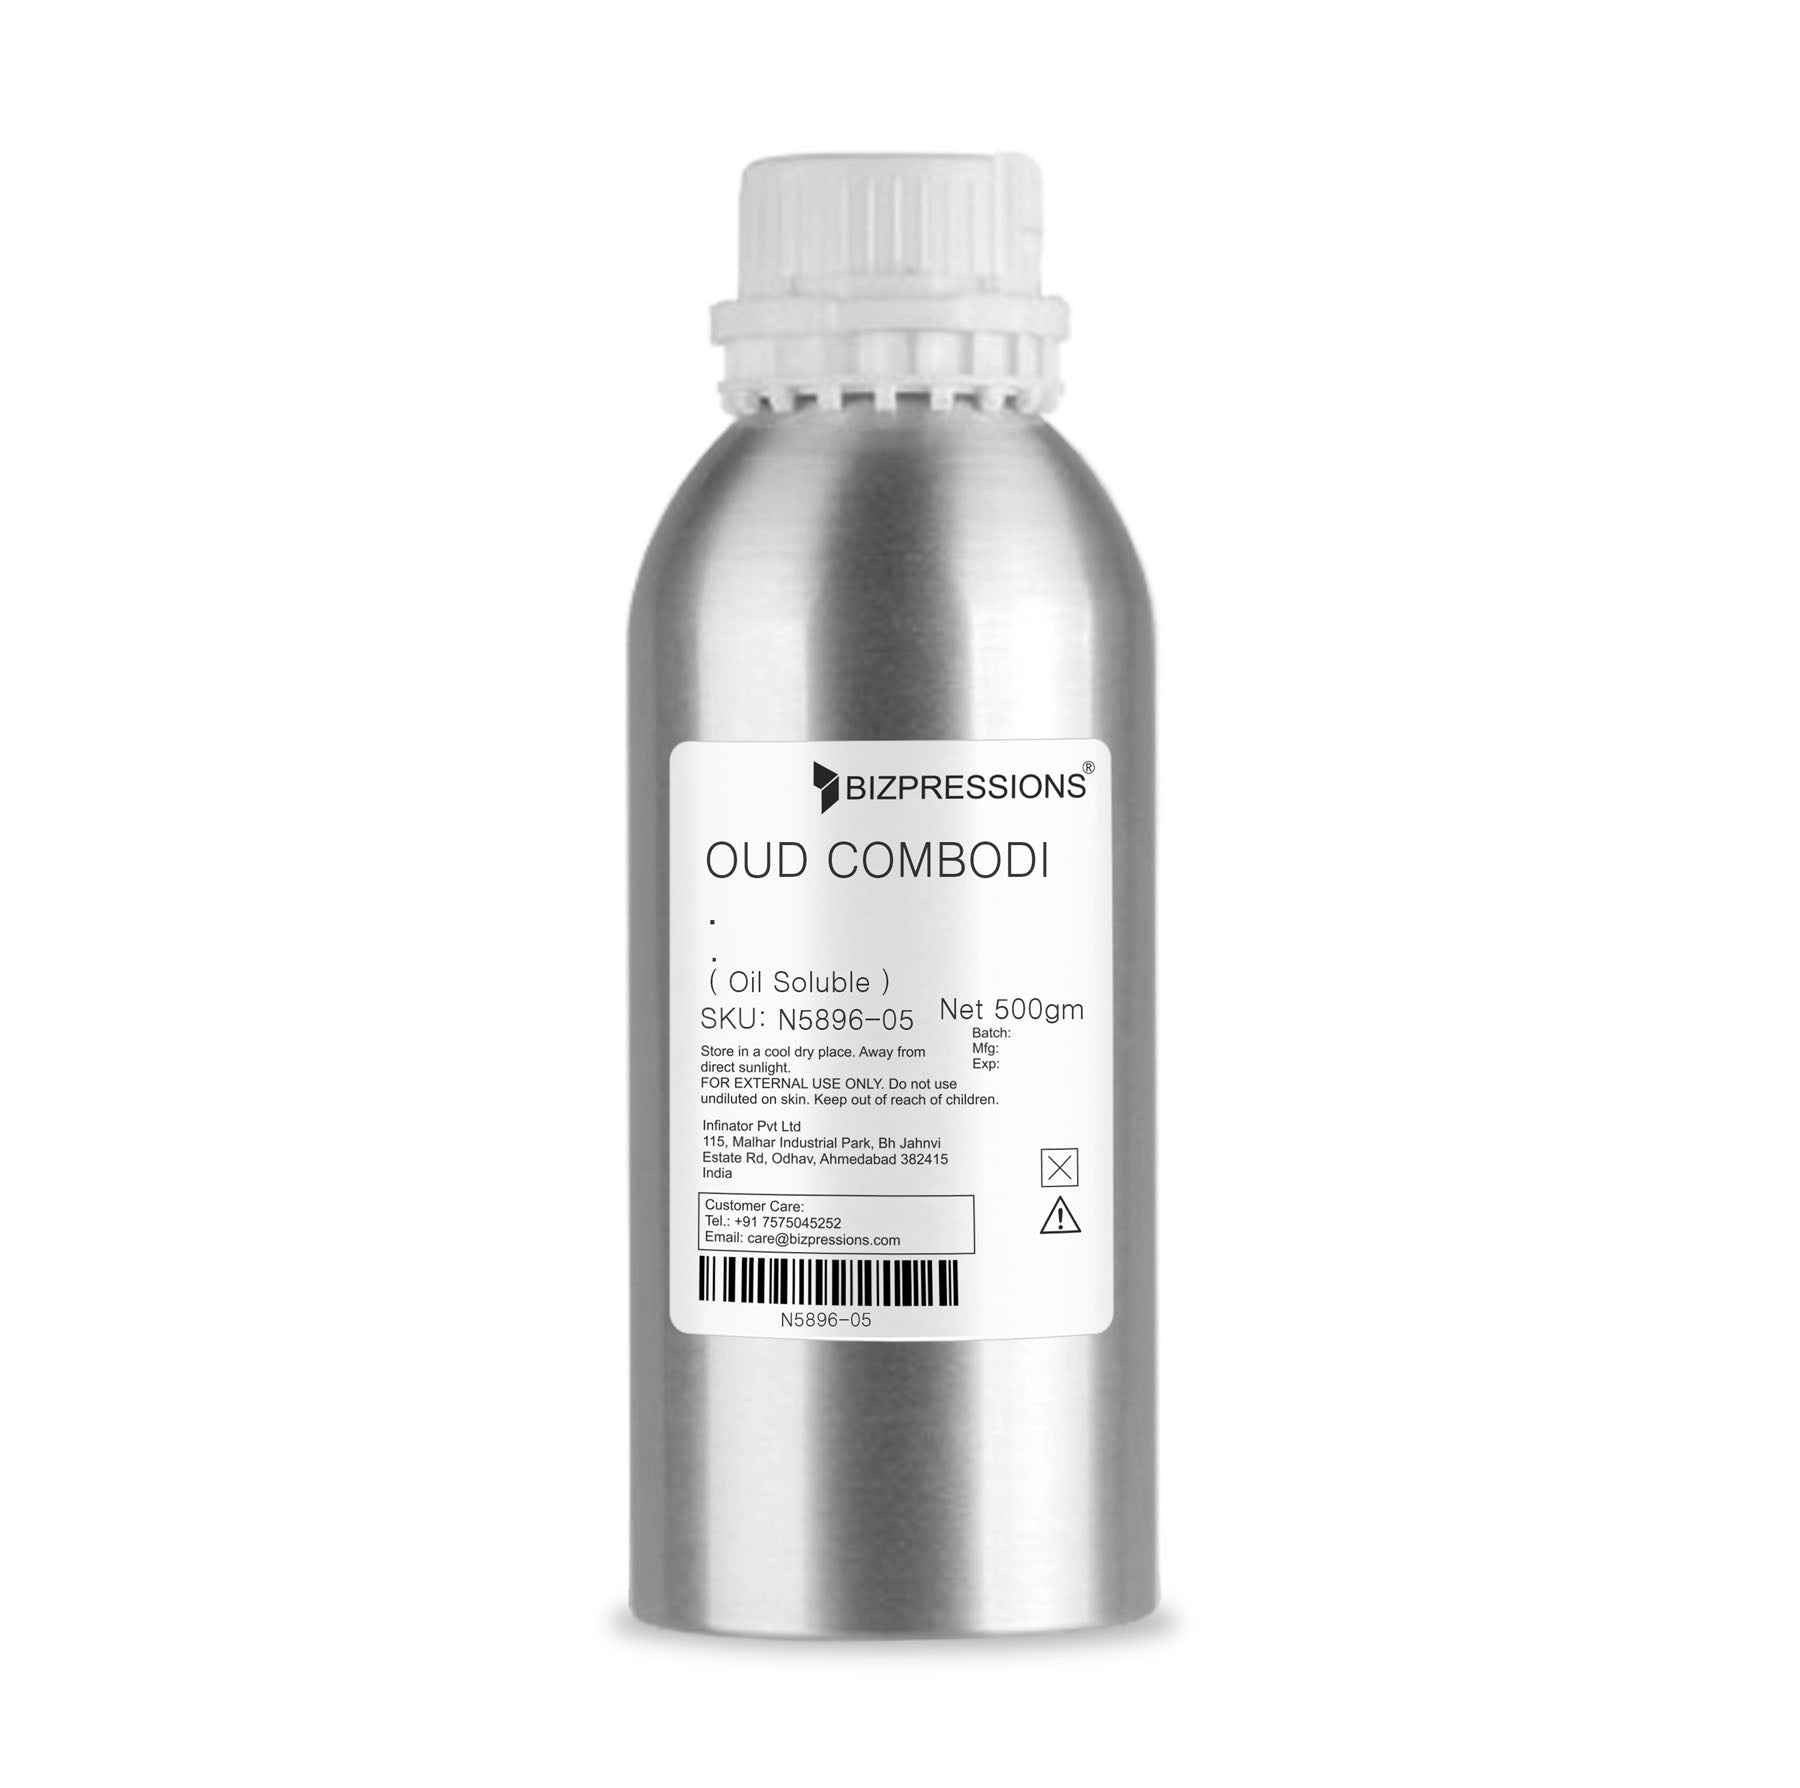 OUD COMBODI - Fragrance ( Oil Soluble ) - 500 gm